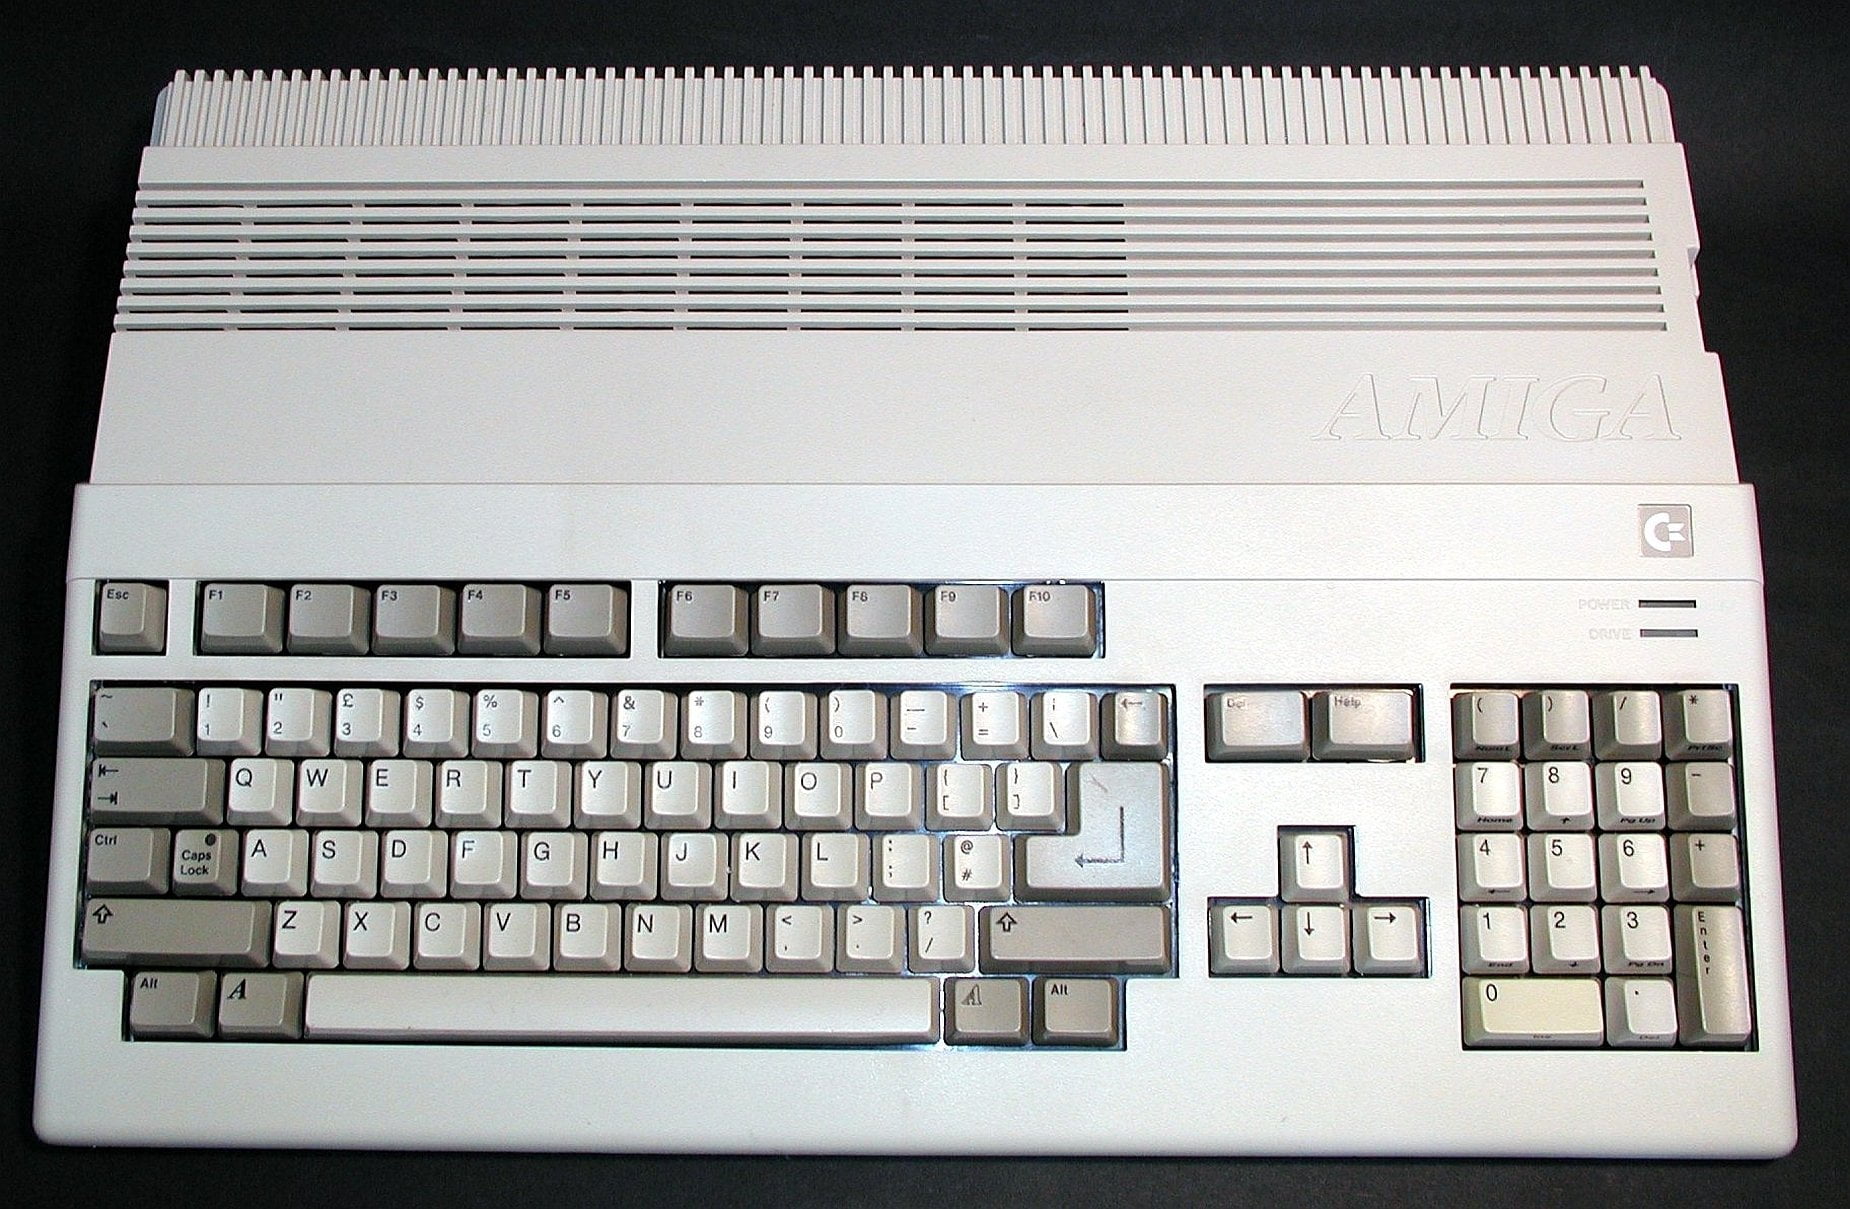 Technology, Commodore amiga, computer, keyboard, communication